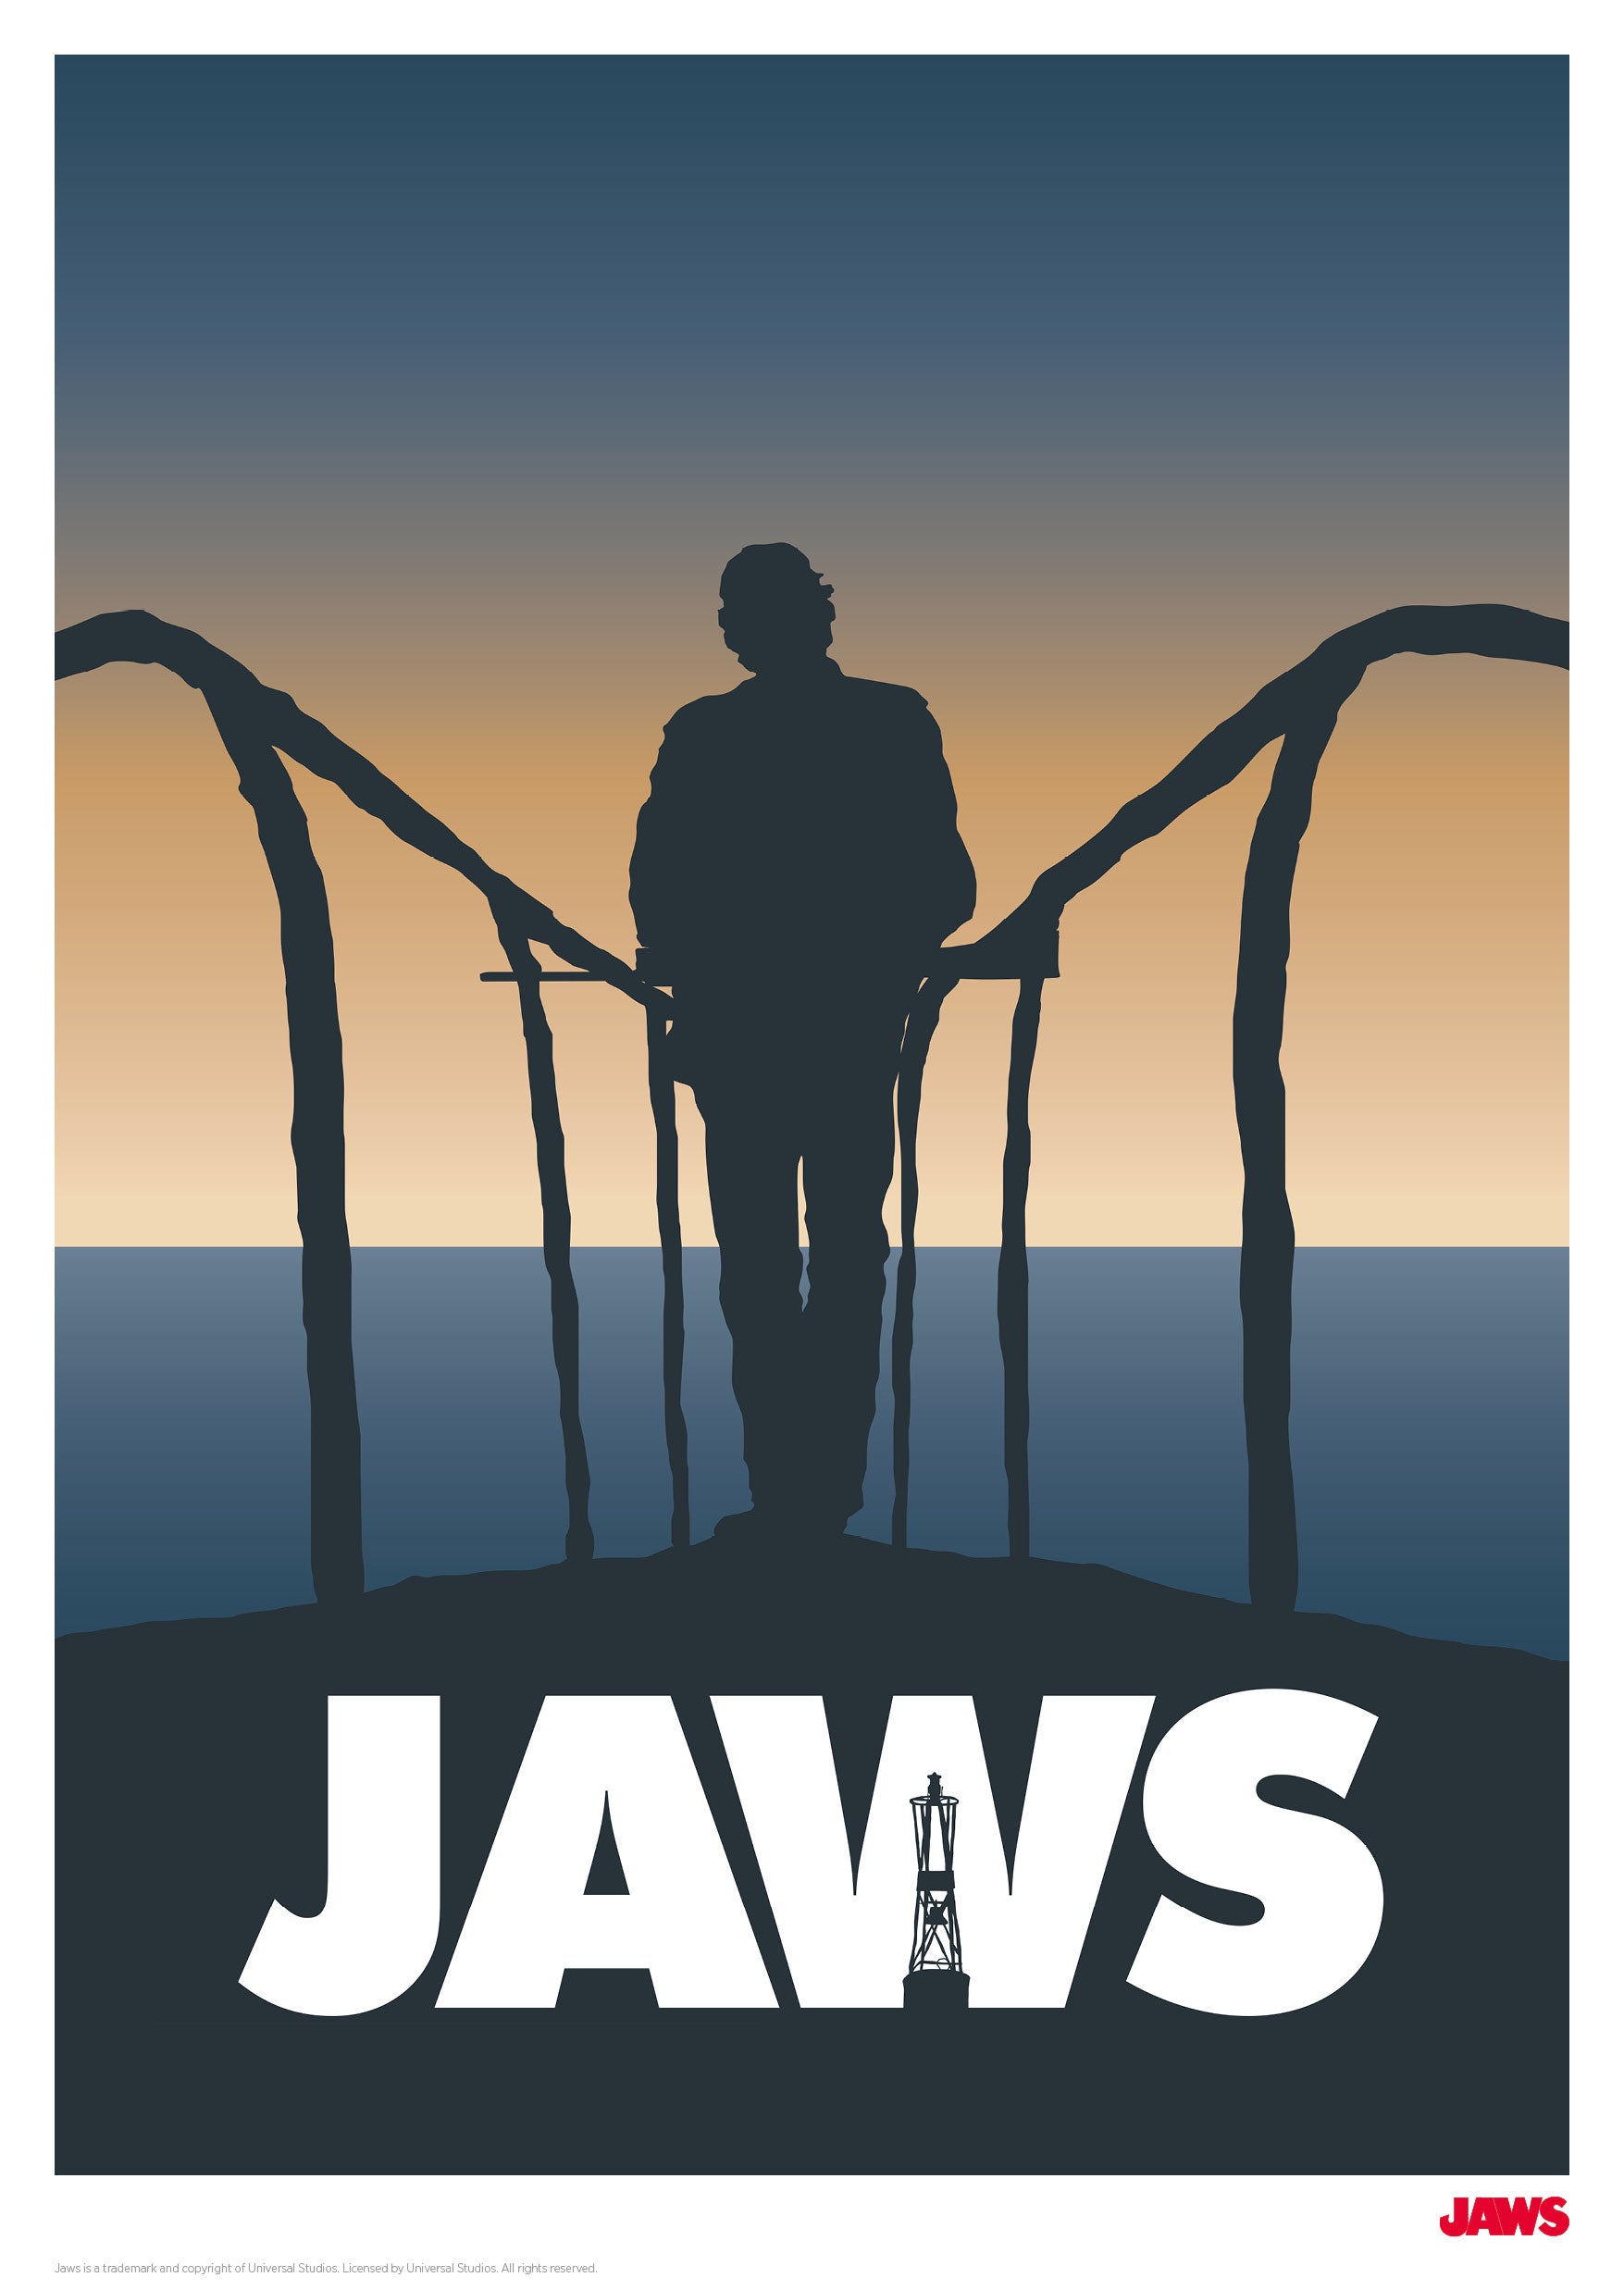 Jaws A3 Print